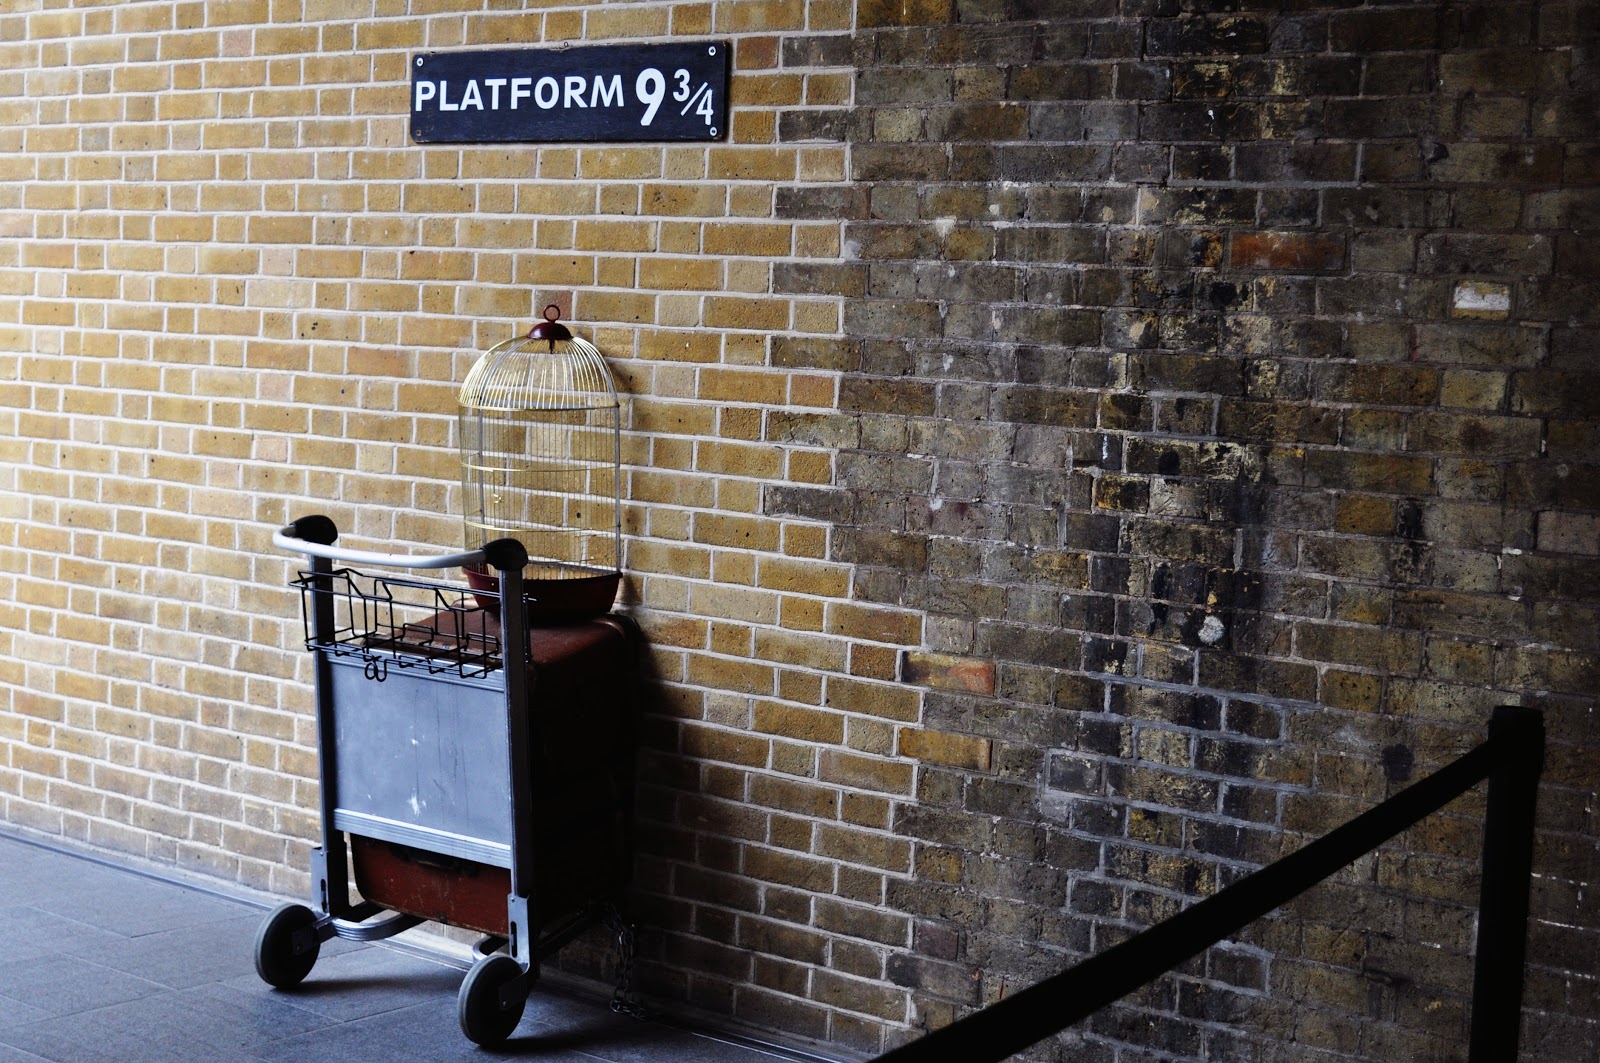 Harry Potter's Platform 9 3/4 at Kings Cross Station. 